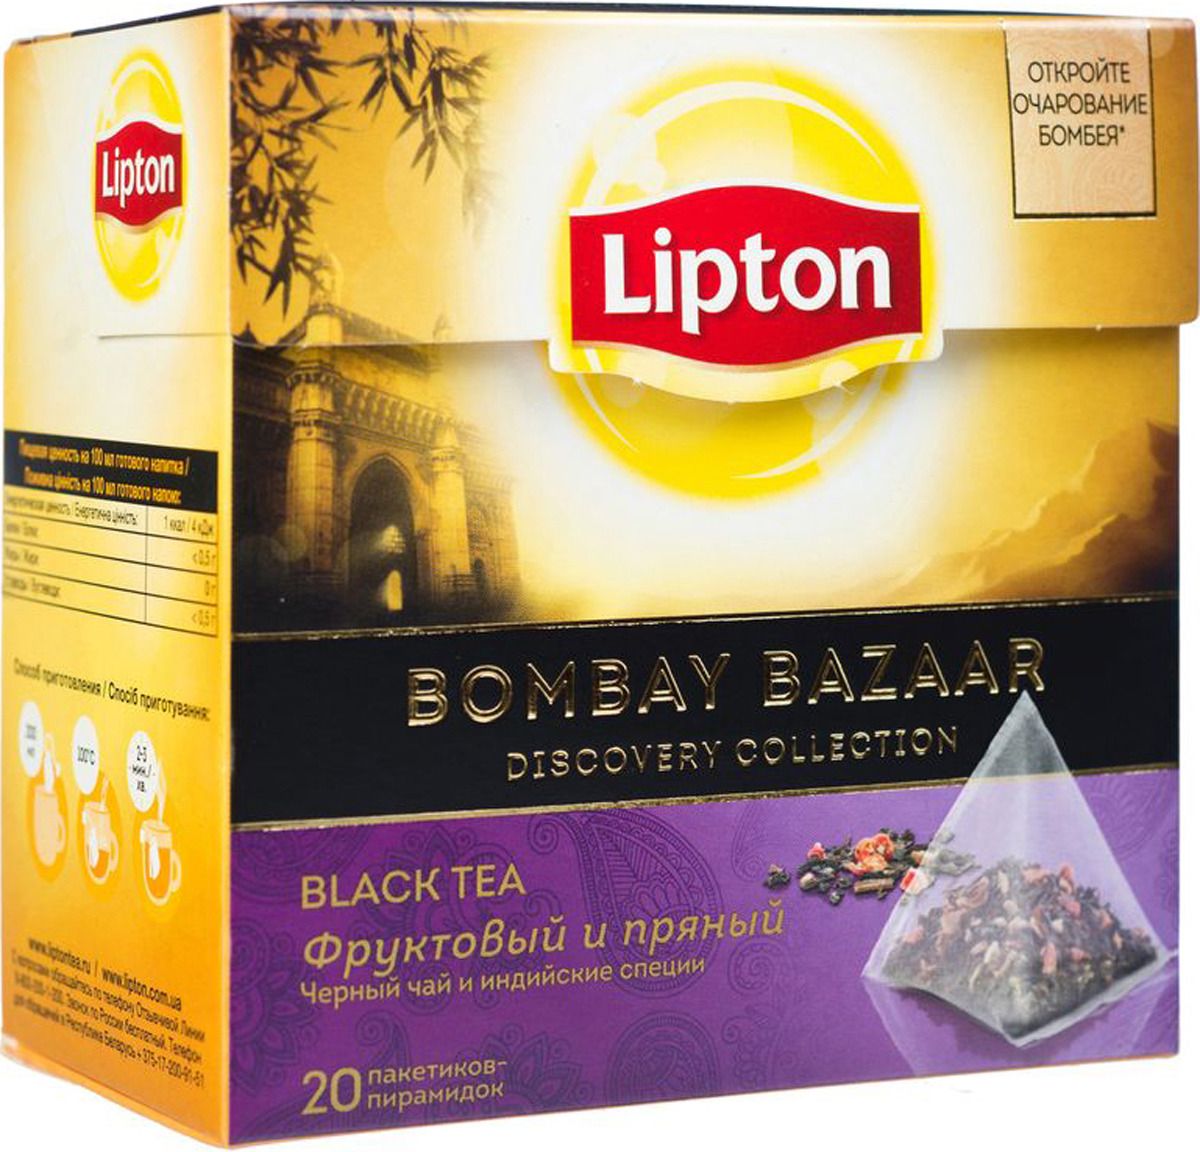 Lipton   Bombay Bazaar 20 